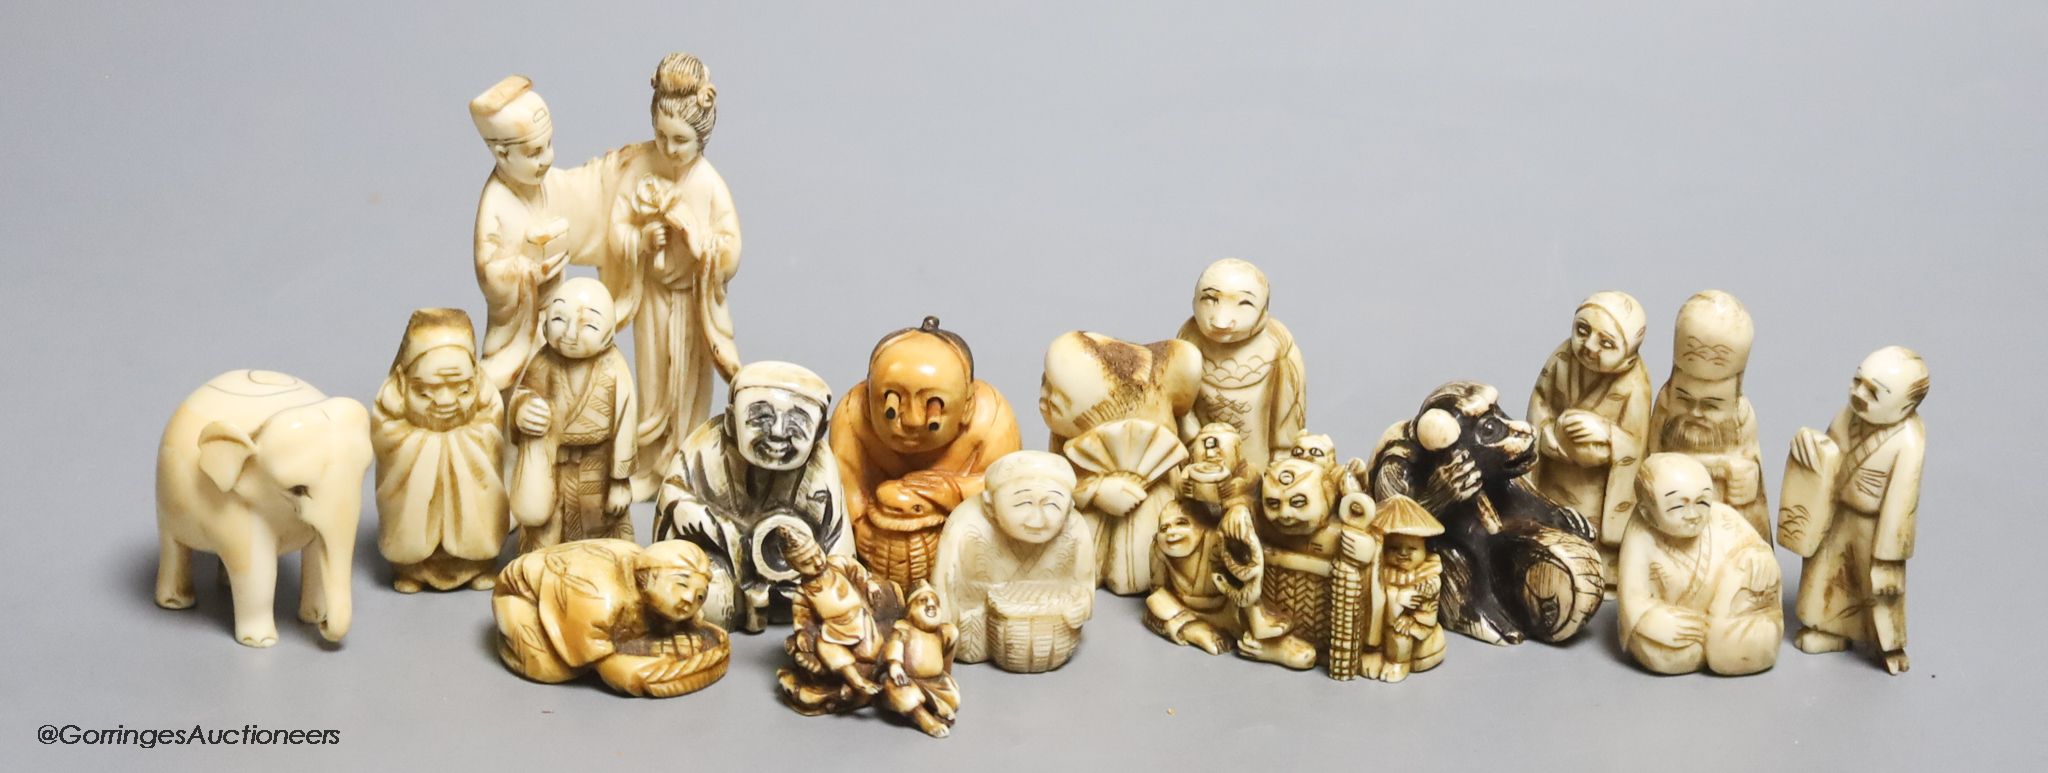 Fourteen Japanese ivory netsuke, a Chinese ivory group and elephant figure, all early 20th century